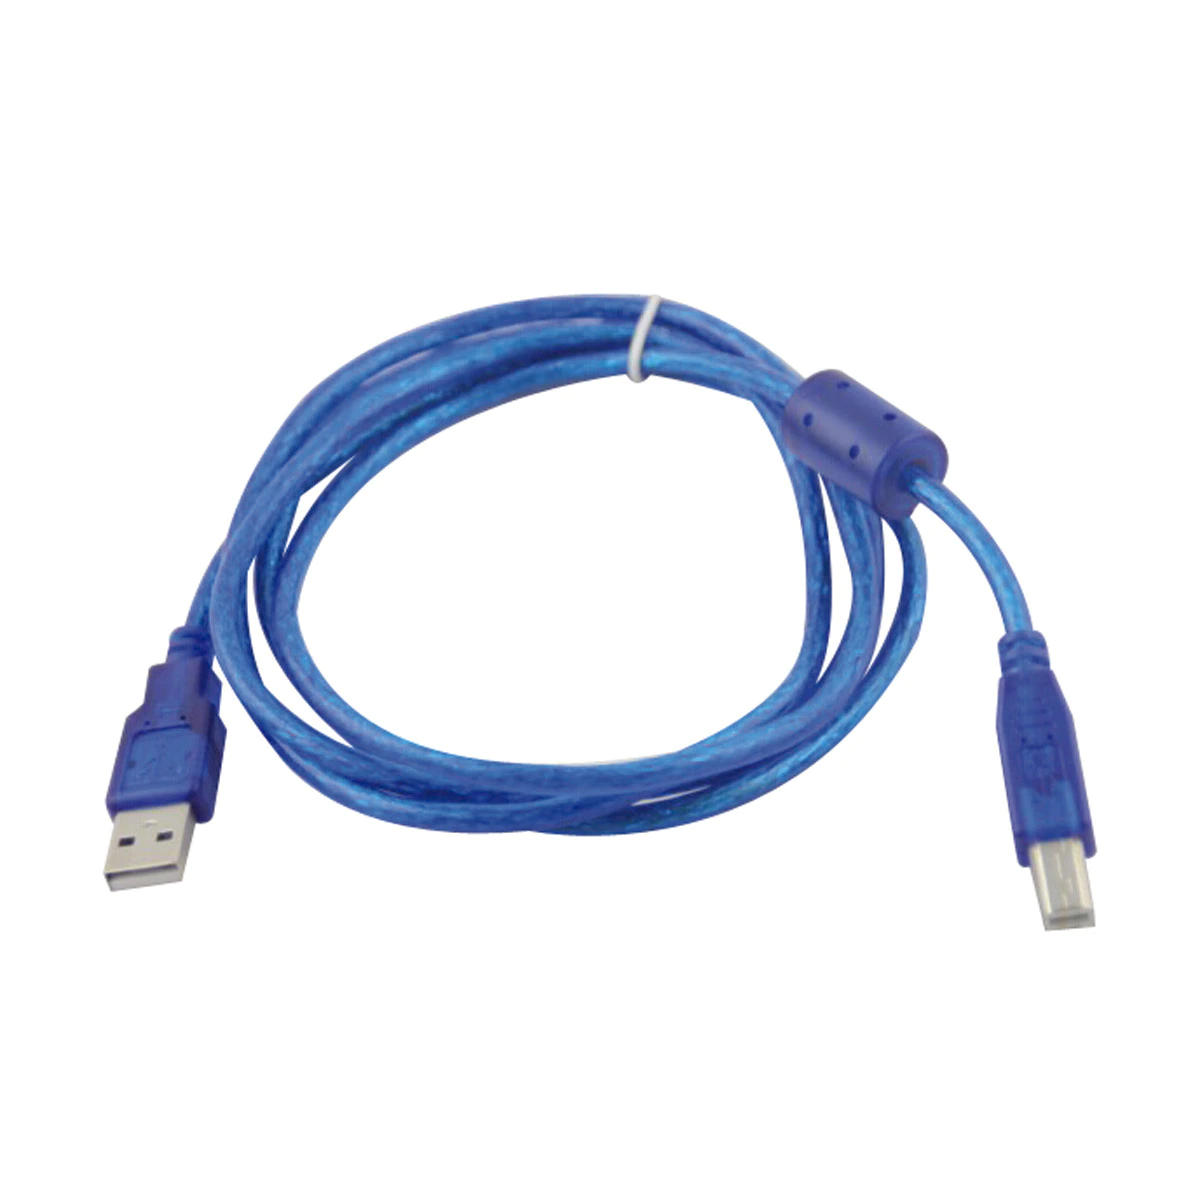 Cable Inves PHK-201C-TL USB 2.0 Tipo A a USB 2.0 Tipo B de 1,5 metros